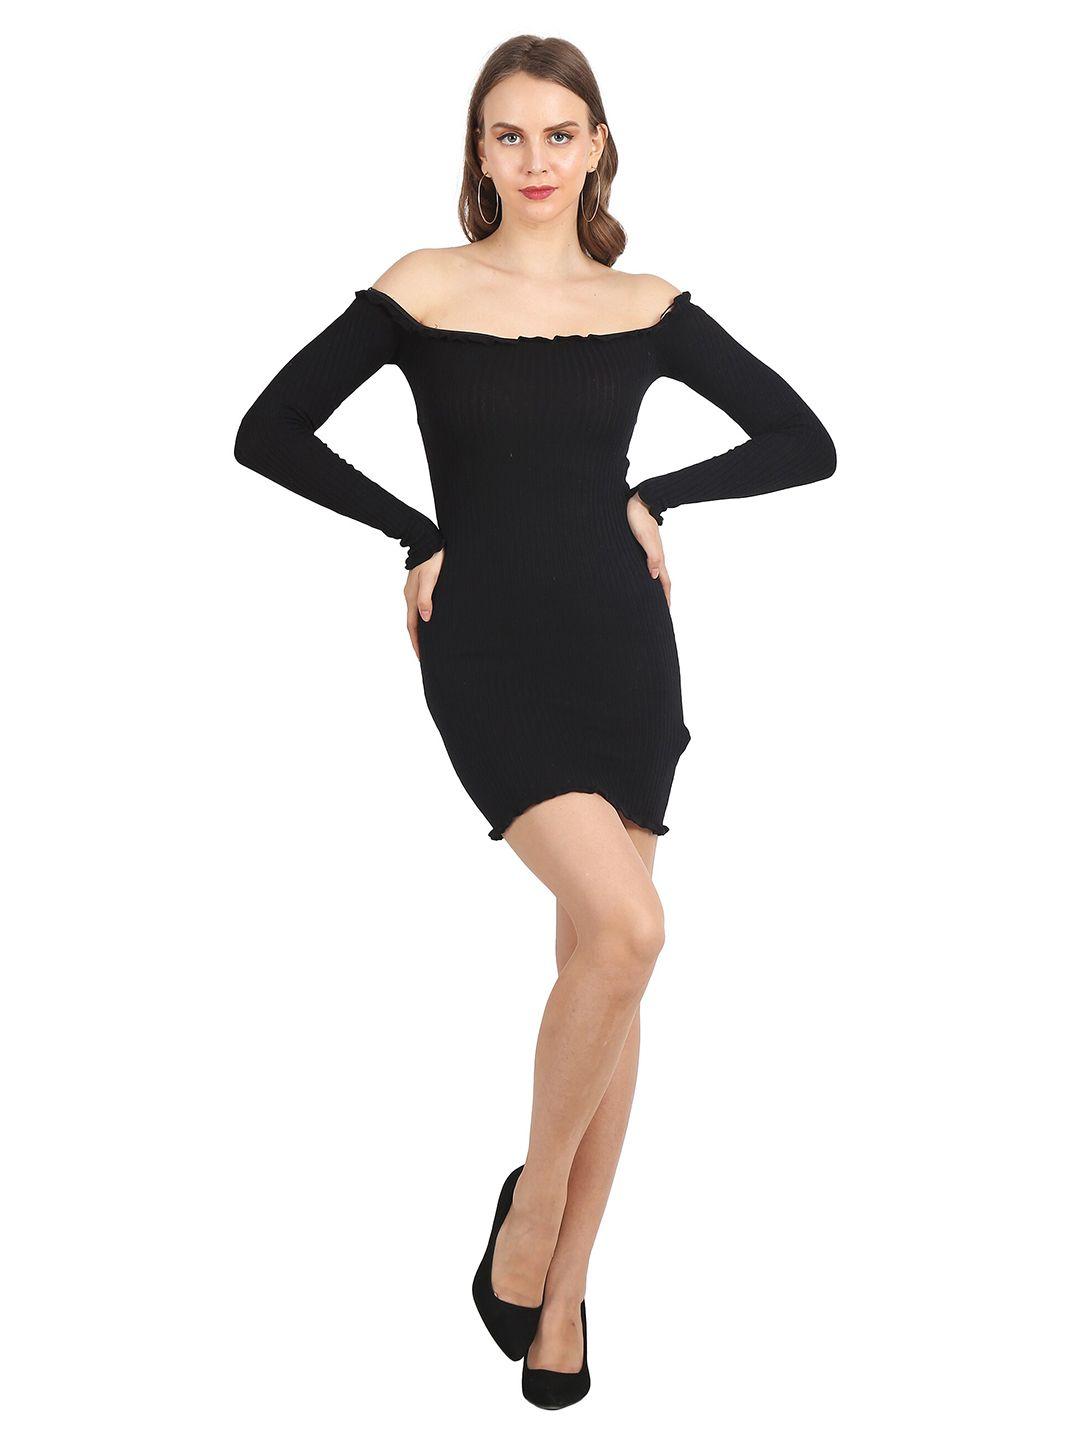 nobarr-women-black-off-shoulder-bodycon-mini-dress